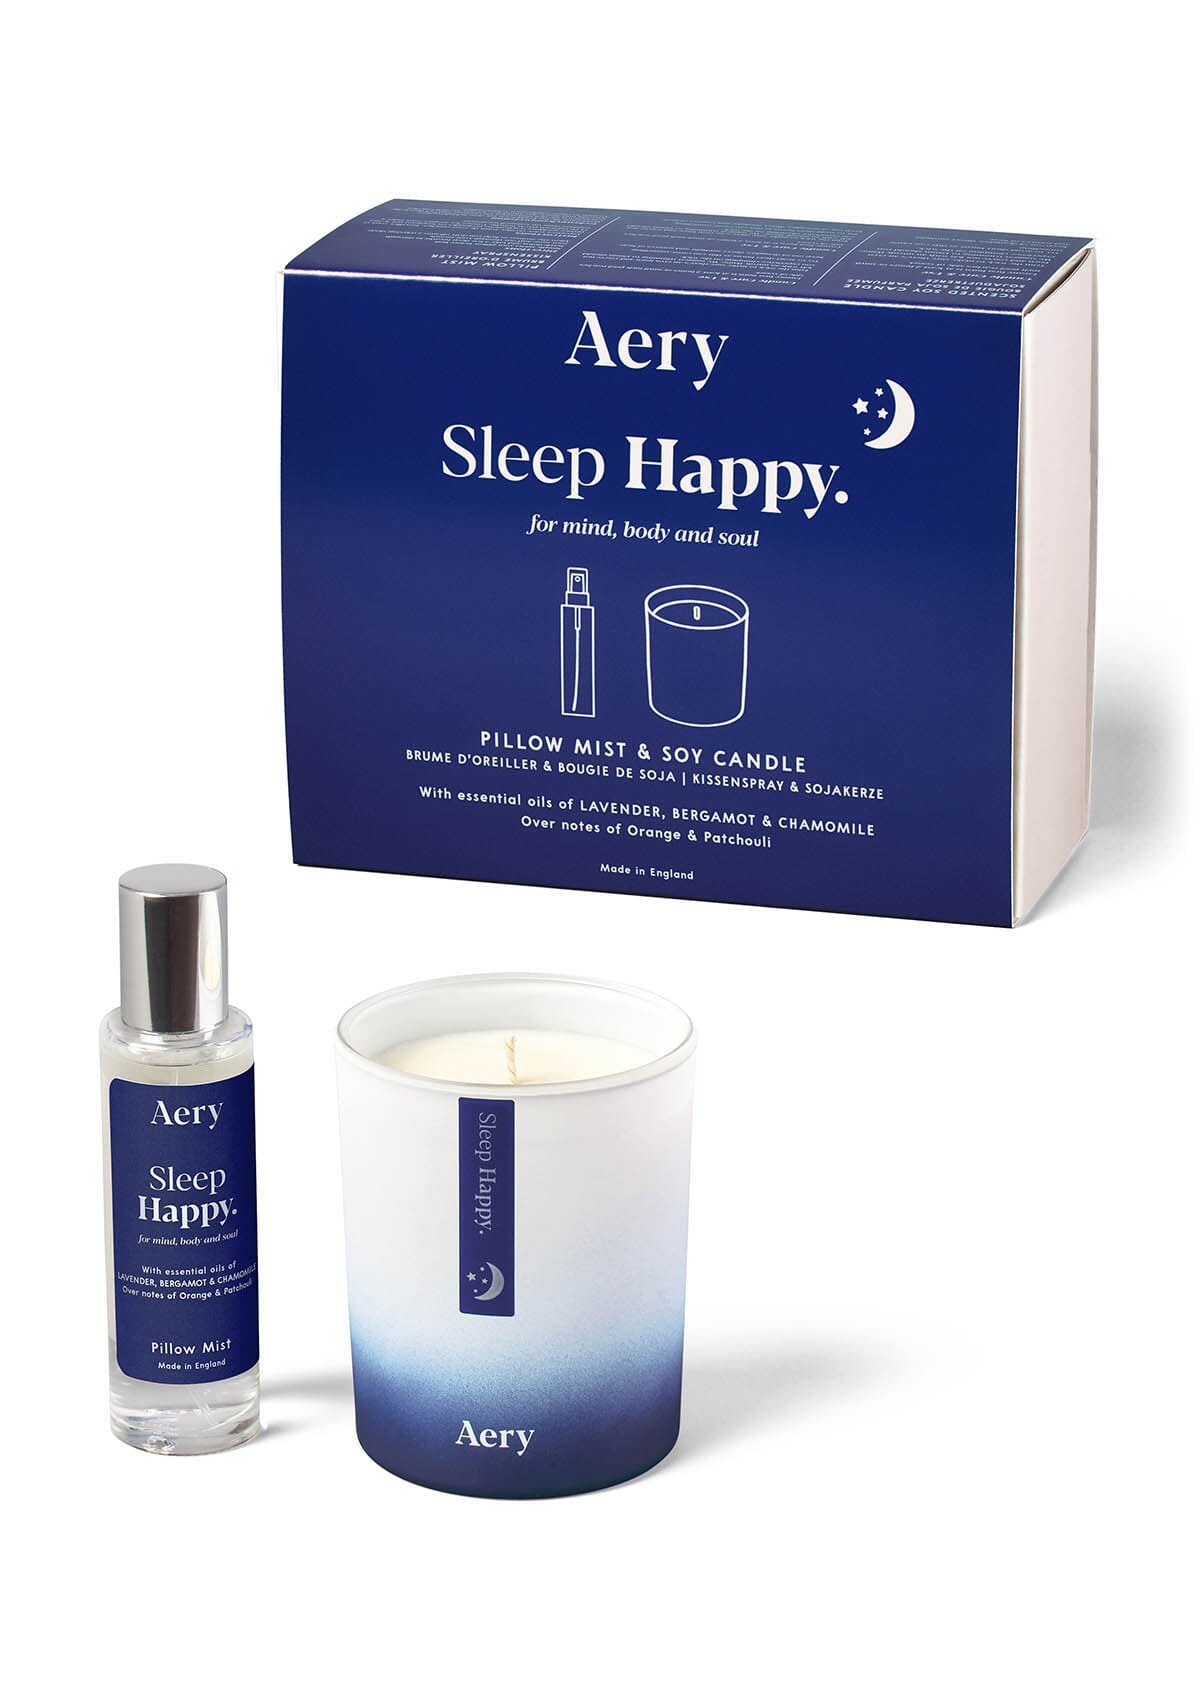 Blue Sleep Happy gift set by Aery displayed on white background 